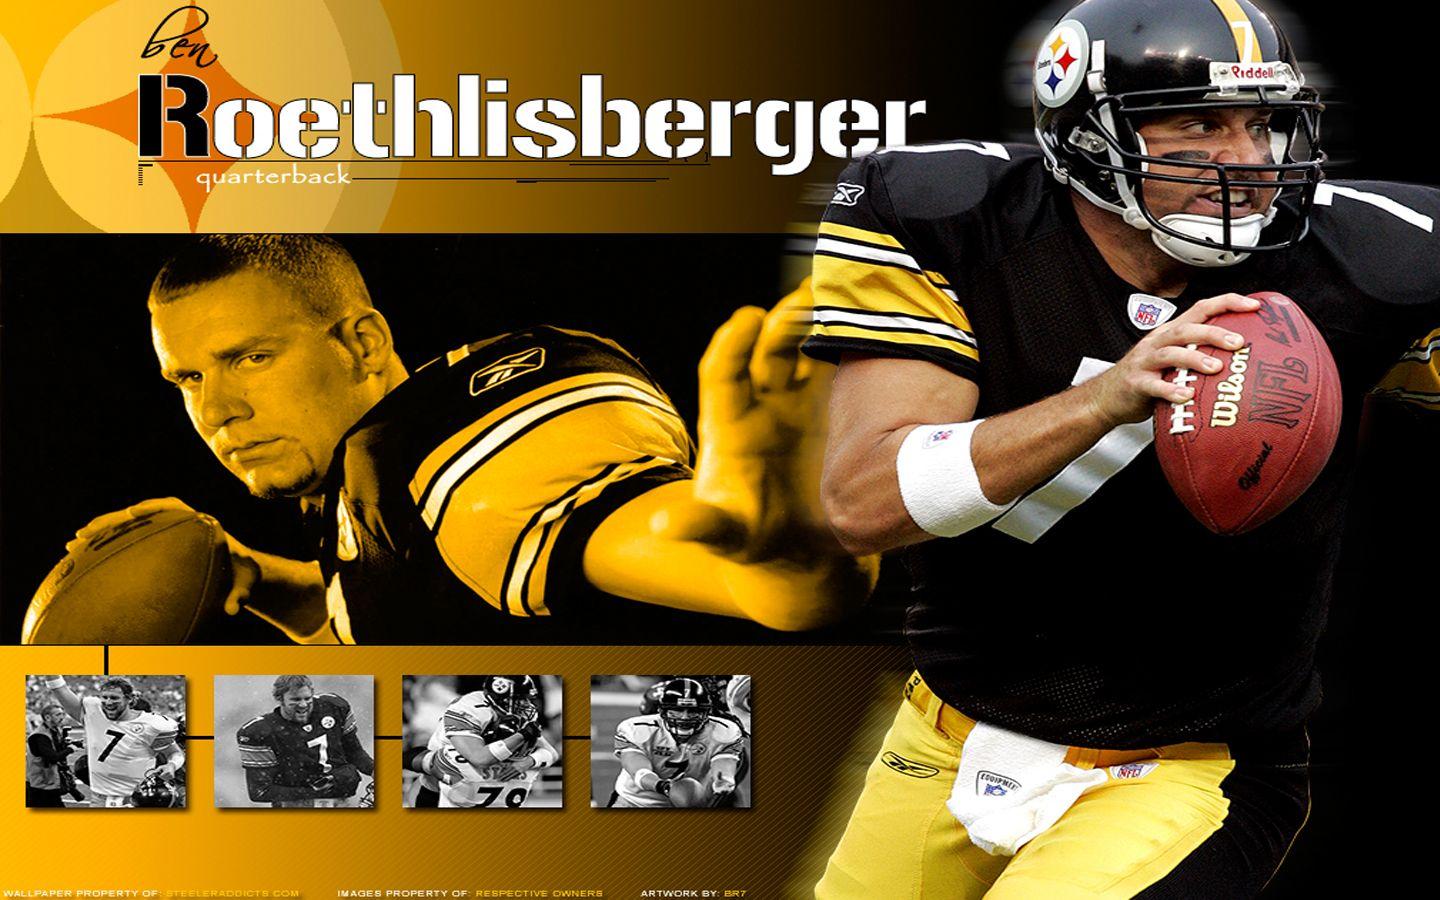 Ben Roethlisberger Passing Leader (all Time): Ben